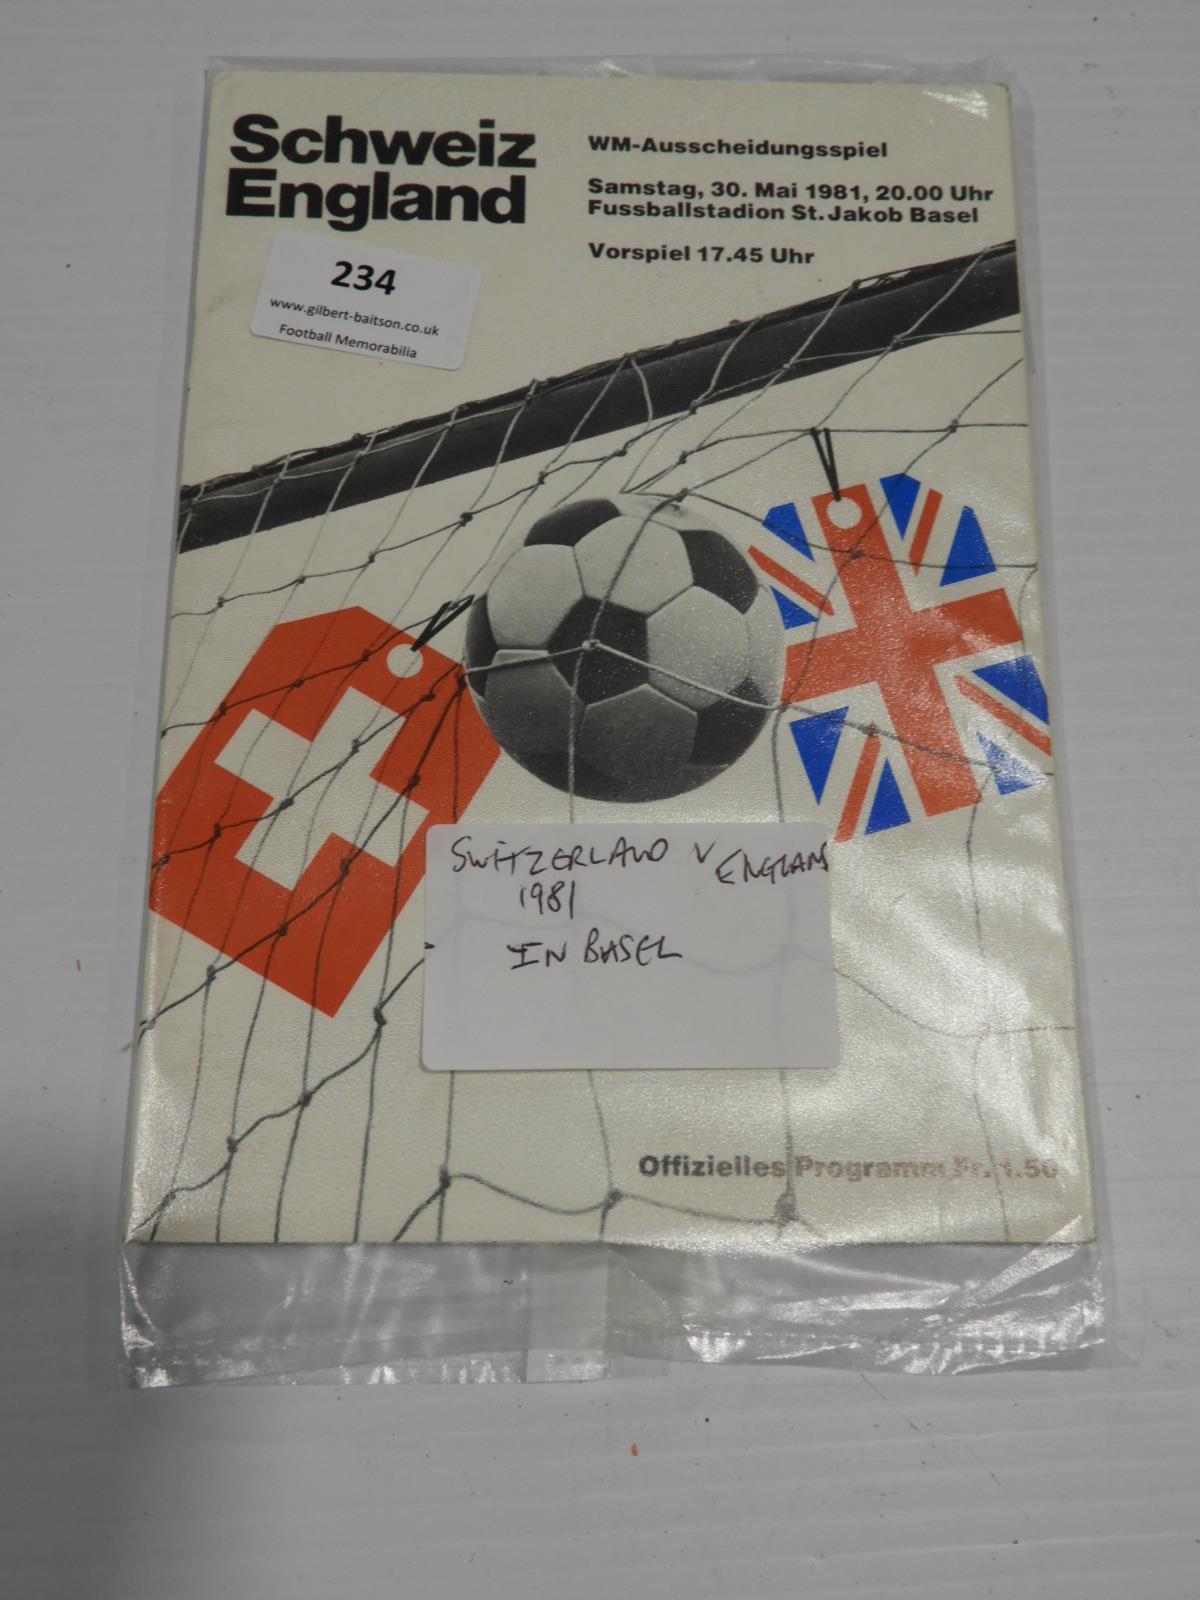 Switzerland vs England 1981 in Basel